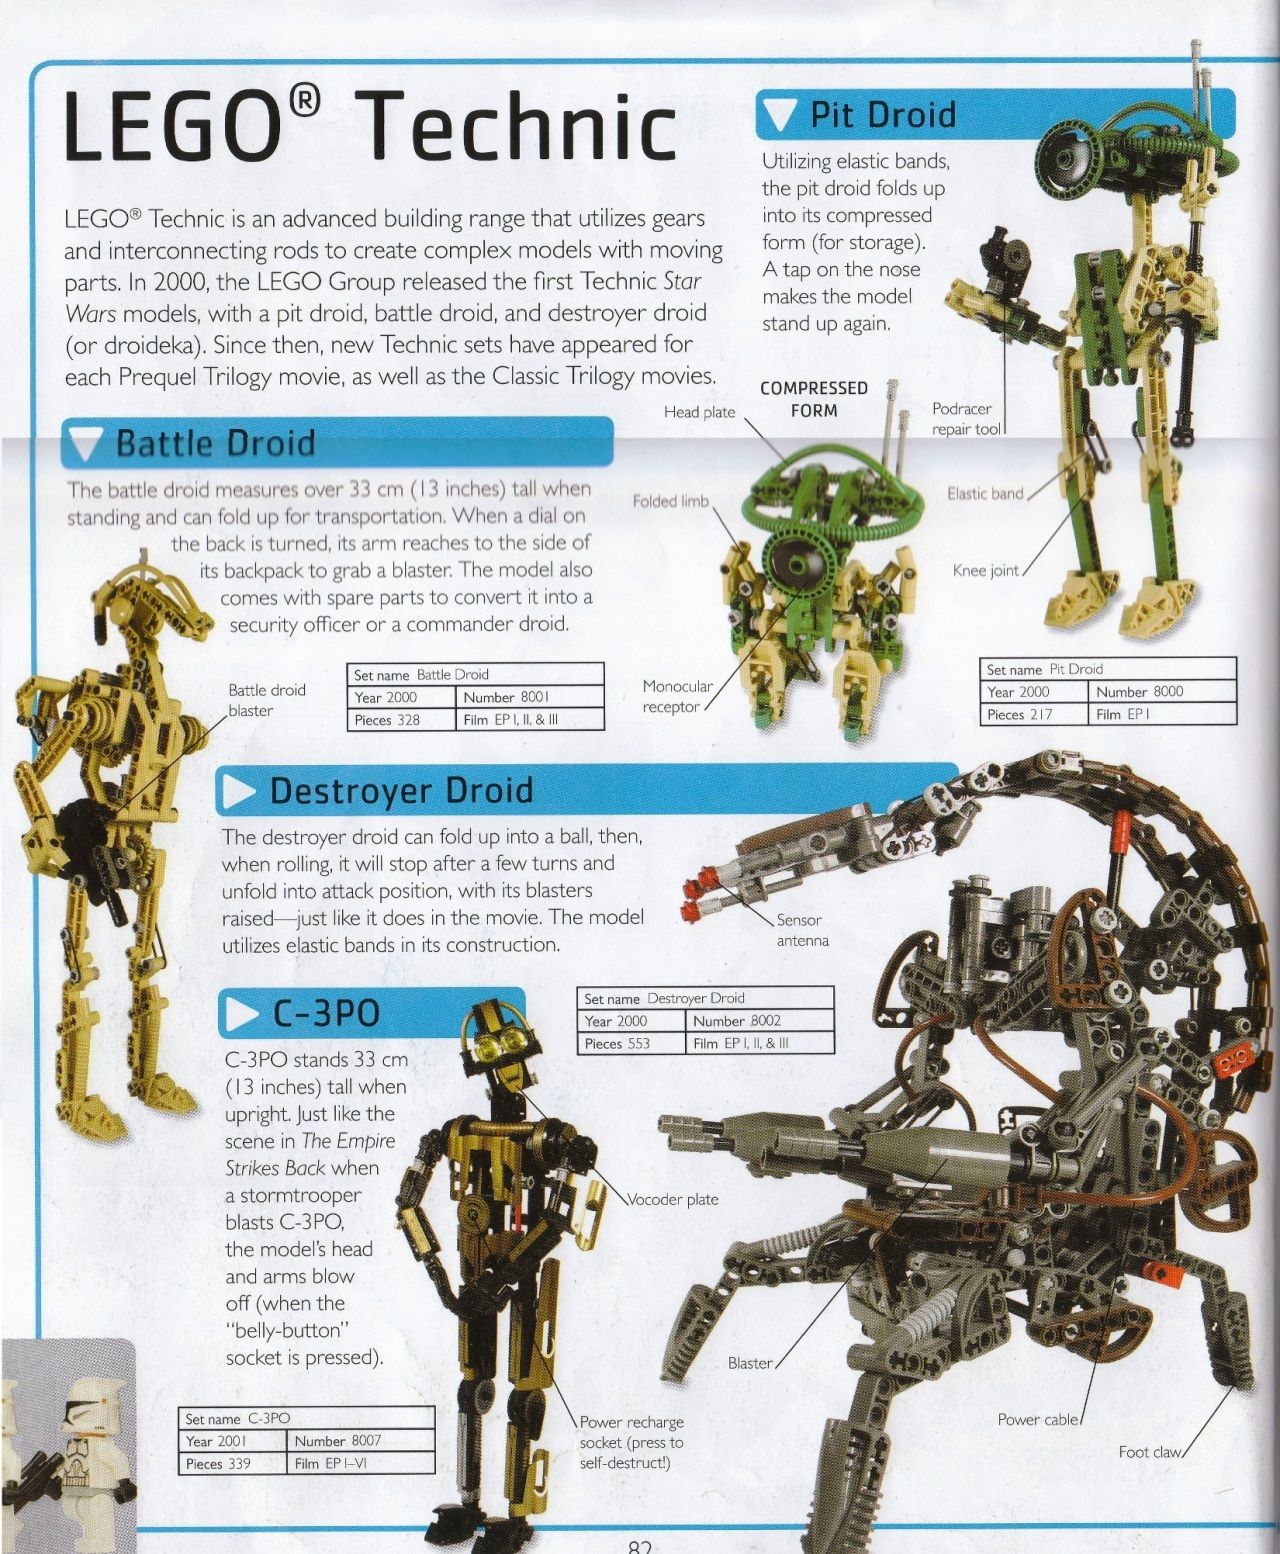 Lego Star Wars The Visual Dictionary 2009 Lego Star Wars The Visual Dictionary 2009 83